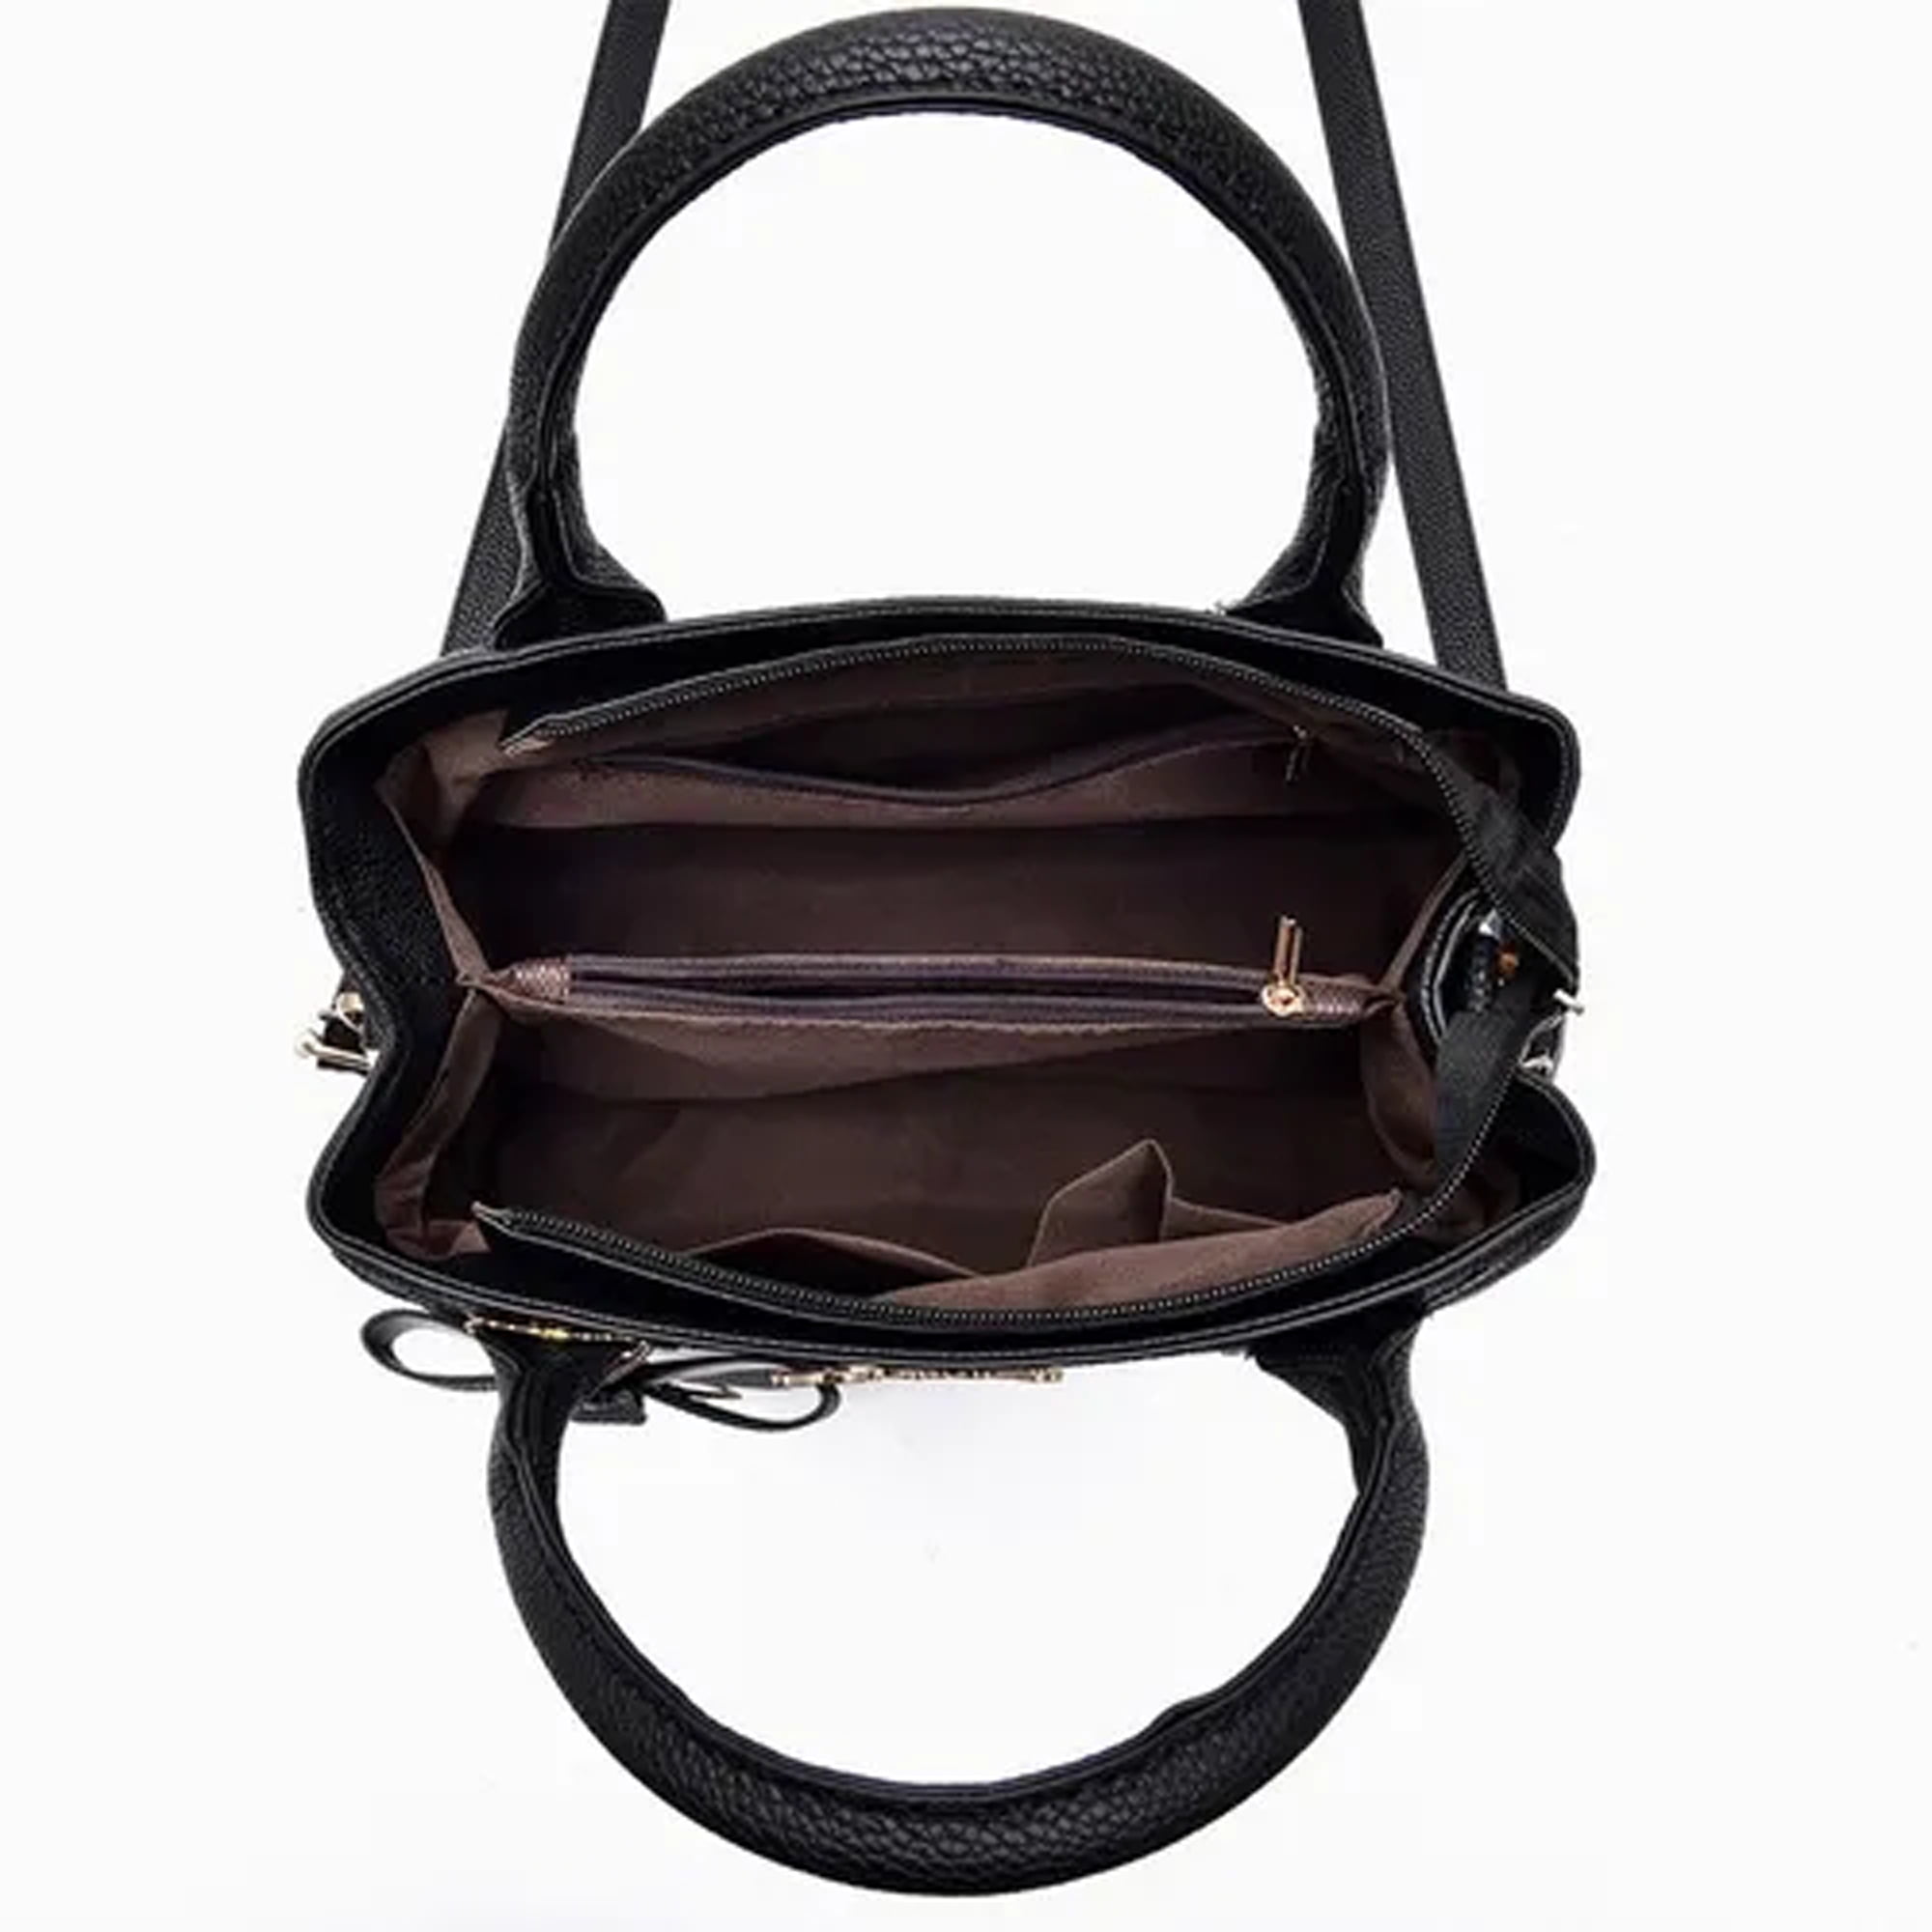  Women's Handbags,Large Capacity Ladies Hand Bags PU Leather  Women Shoulder Bags Handbags Women Bags Designer 24x8x18cm-1 : ביגוד,  נעליים ותכשיטים